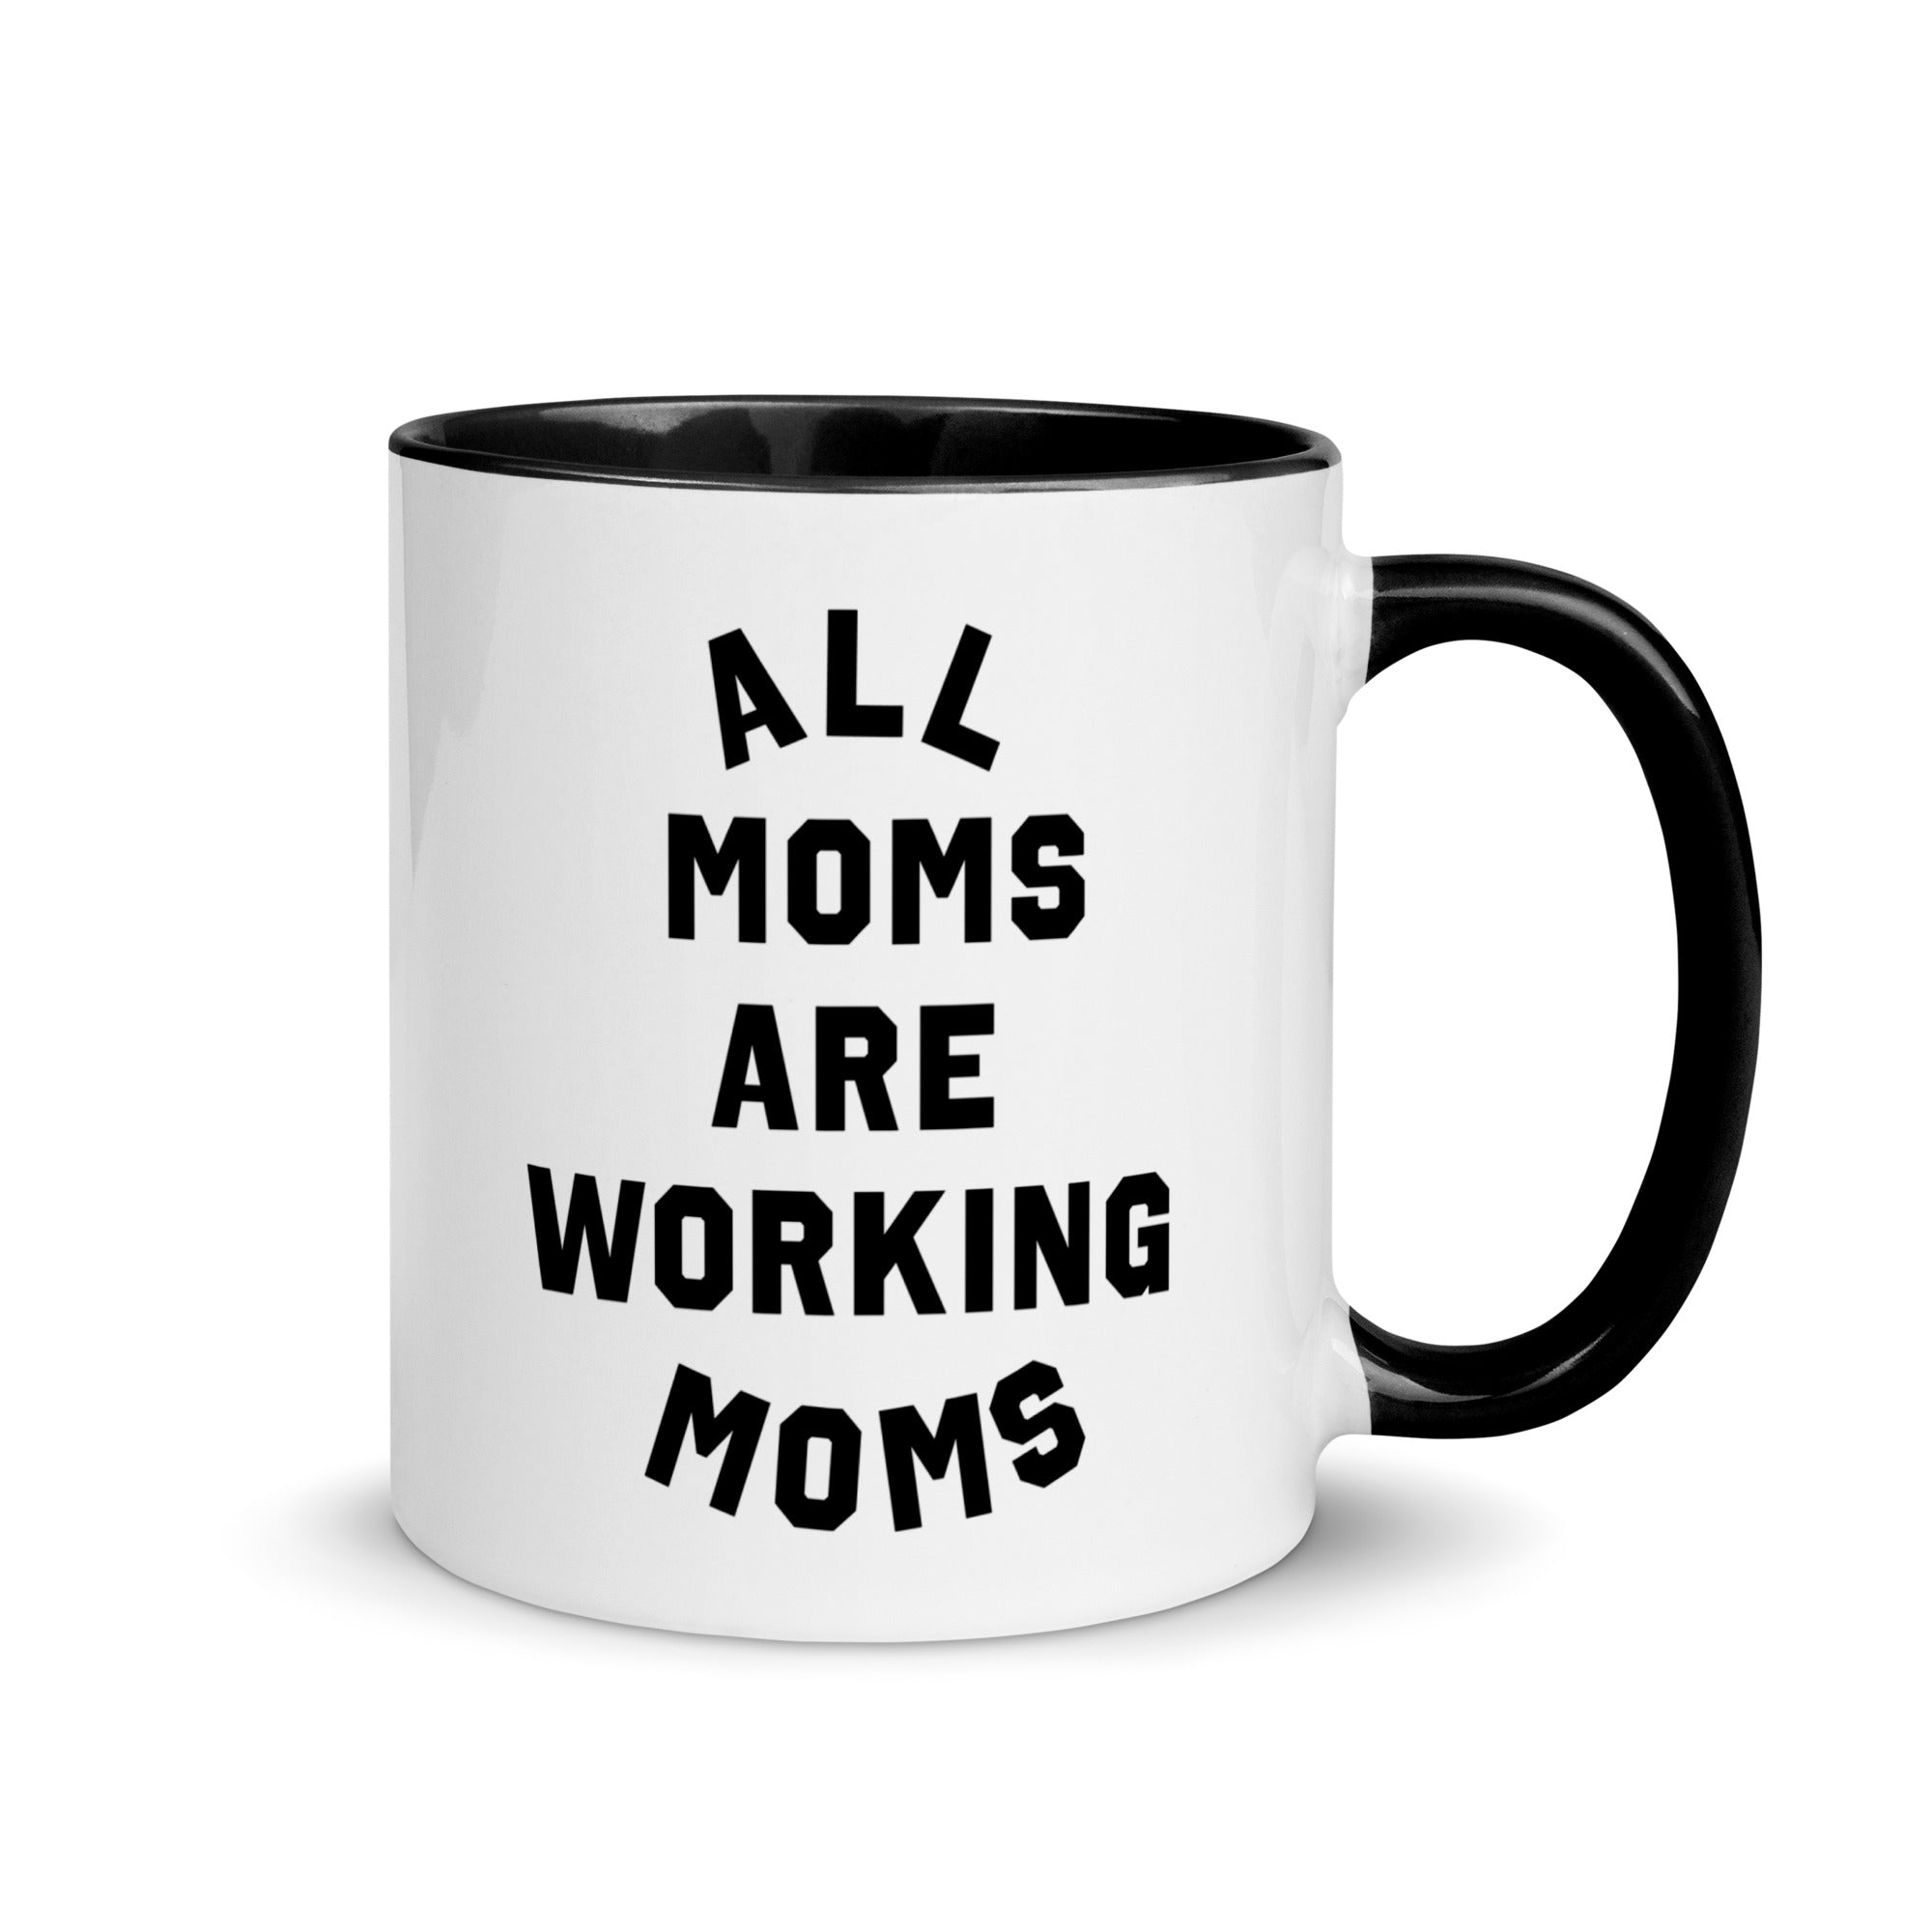 All Moms Are Working Moms Mug (11oz)